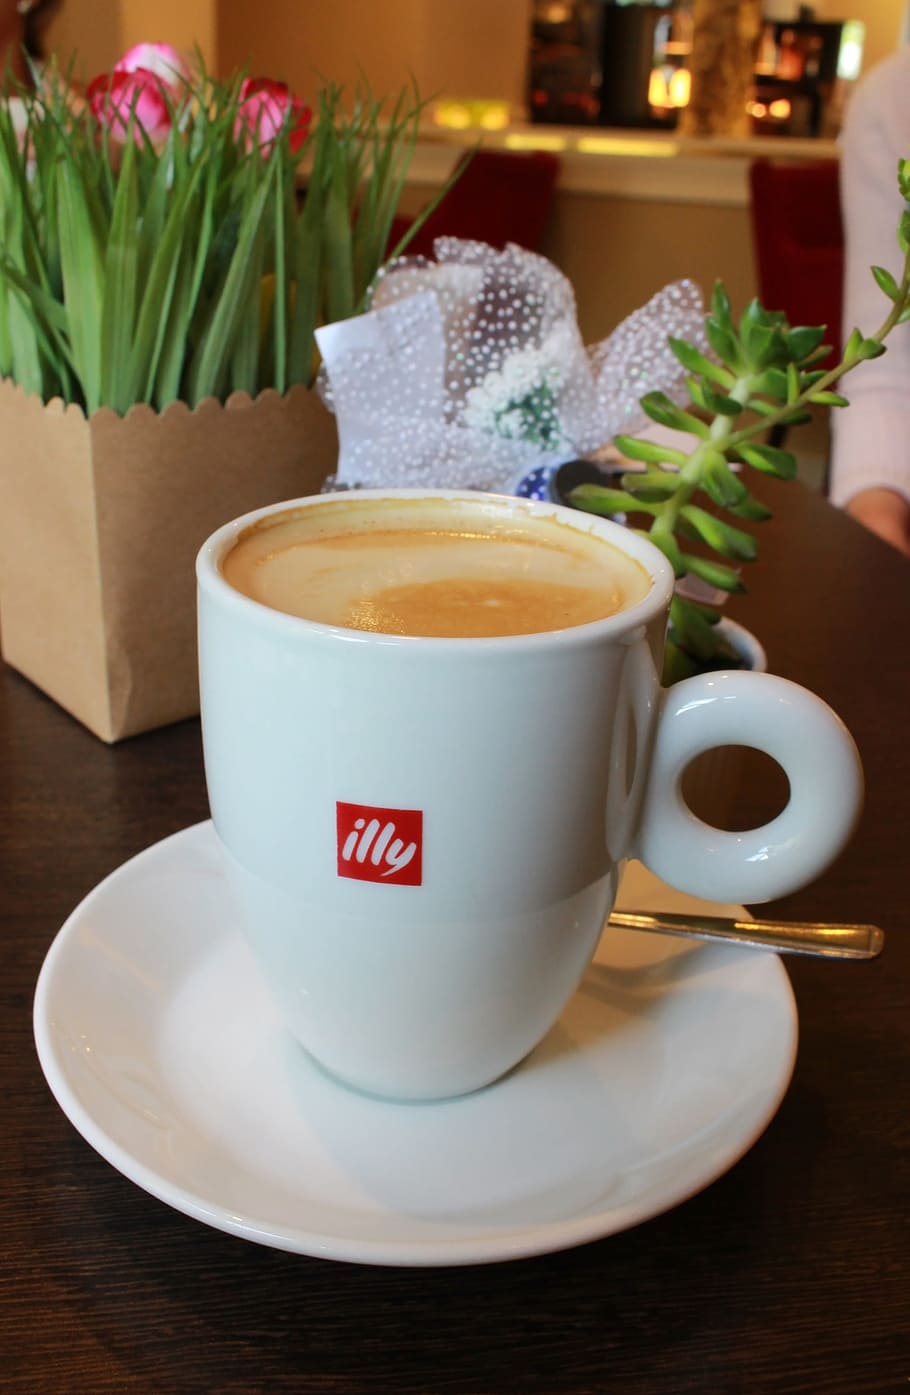 cup, illy, branded, coffee, -, illycaffe, italian coffee roasting company, specializing, espresso, editorial use